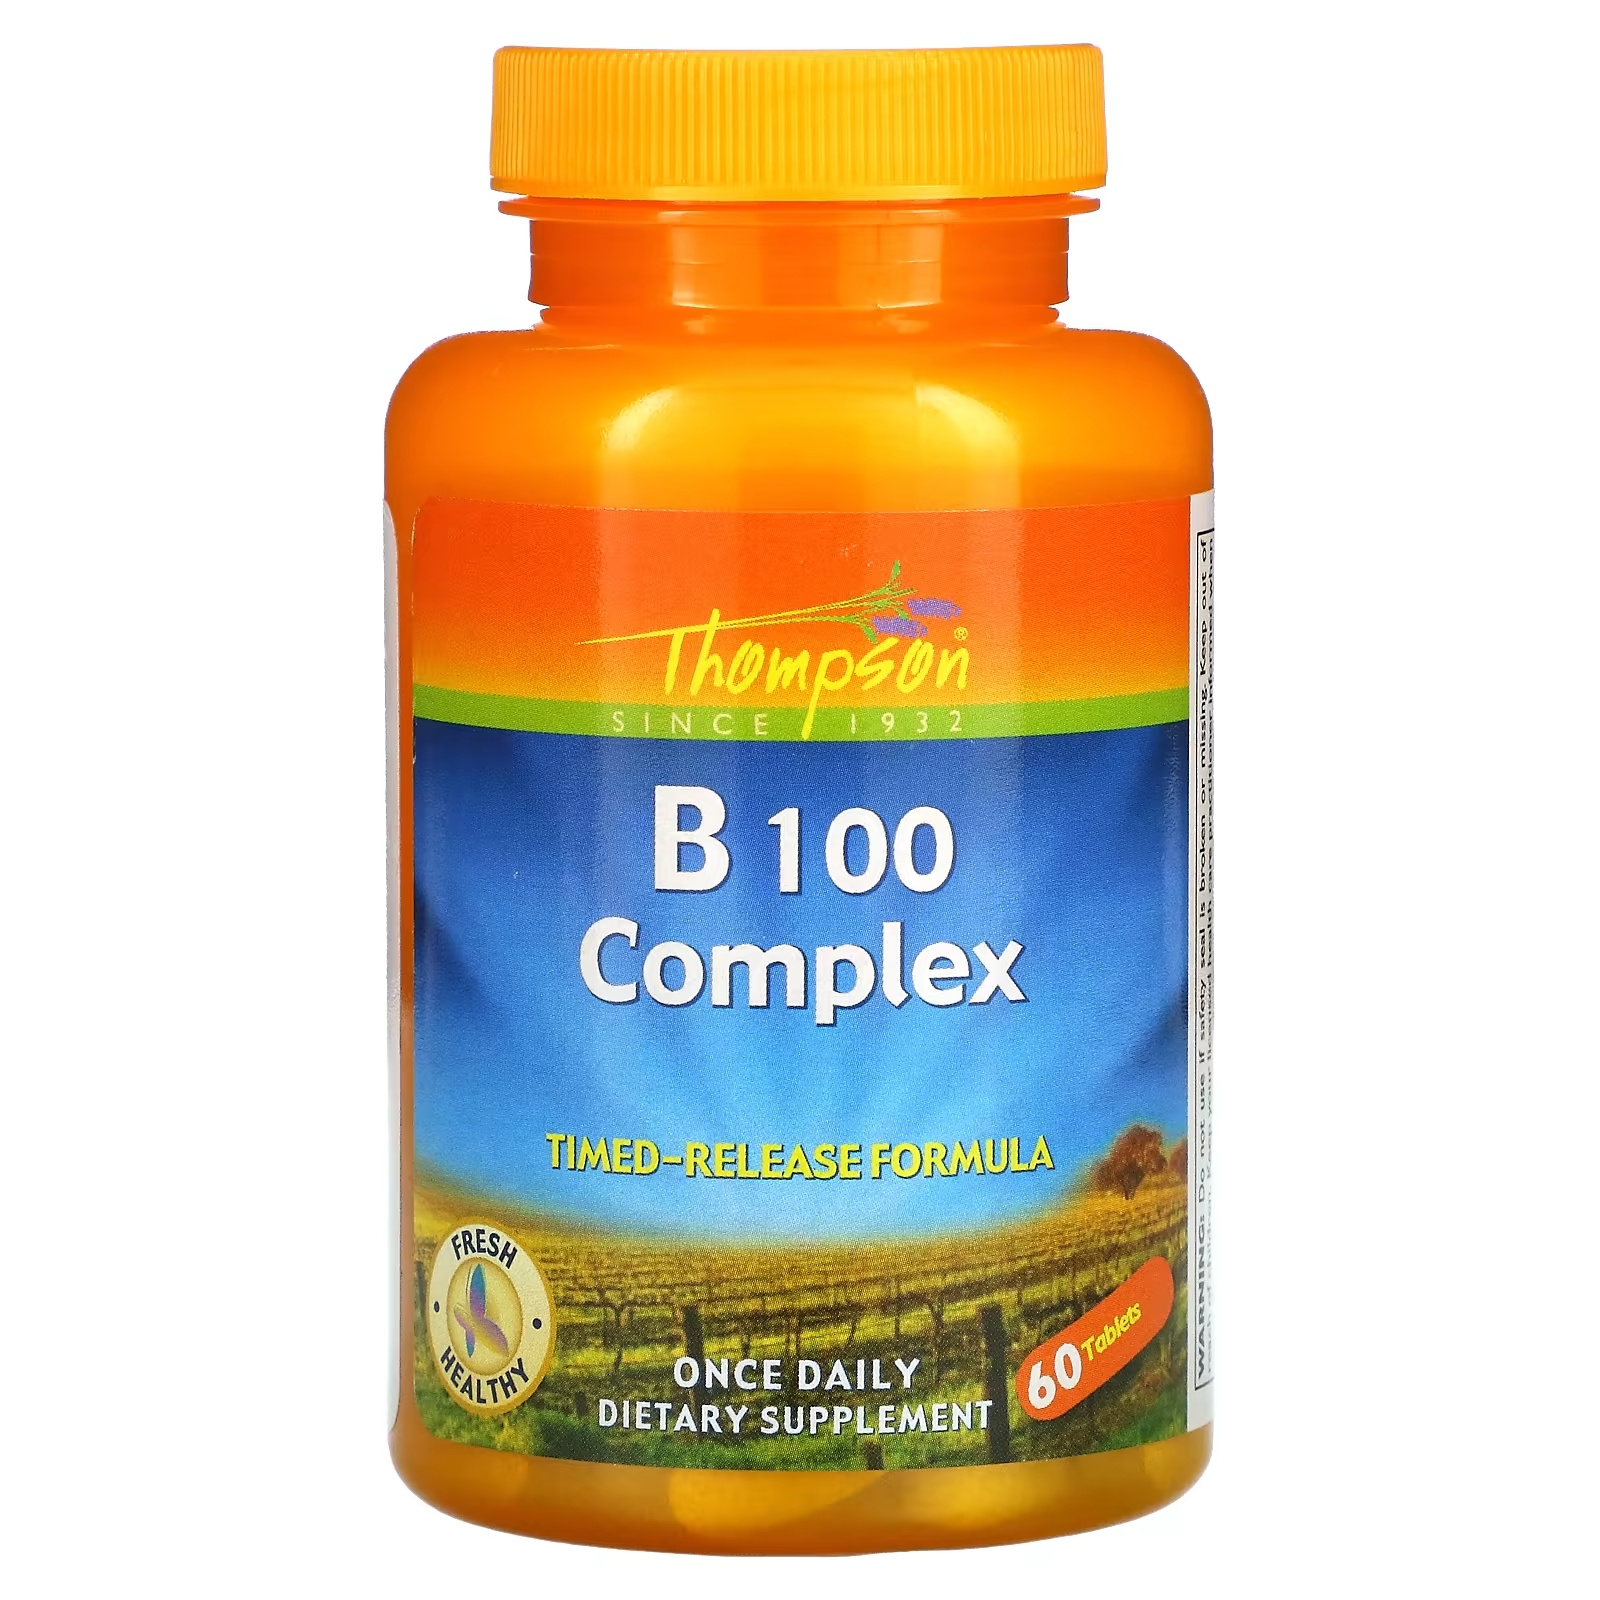 Thompson комплекс витаминов группы В, 60 таблеток thompson b50 complex комплекс витаминов группы в 60 вегетарианских капсул